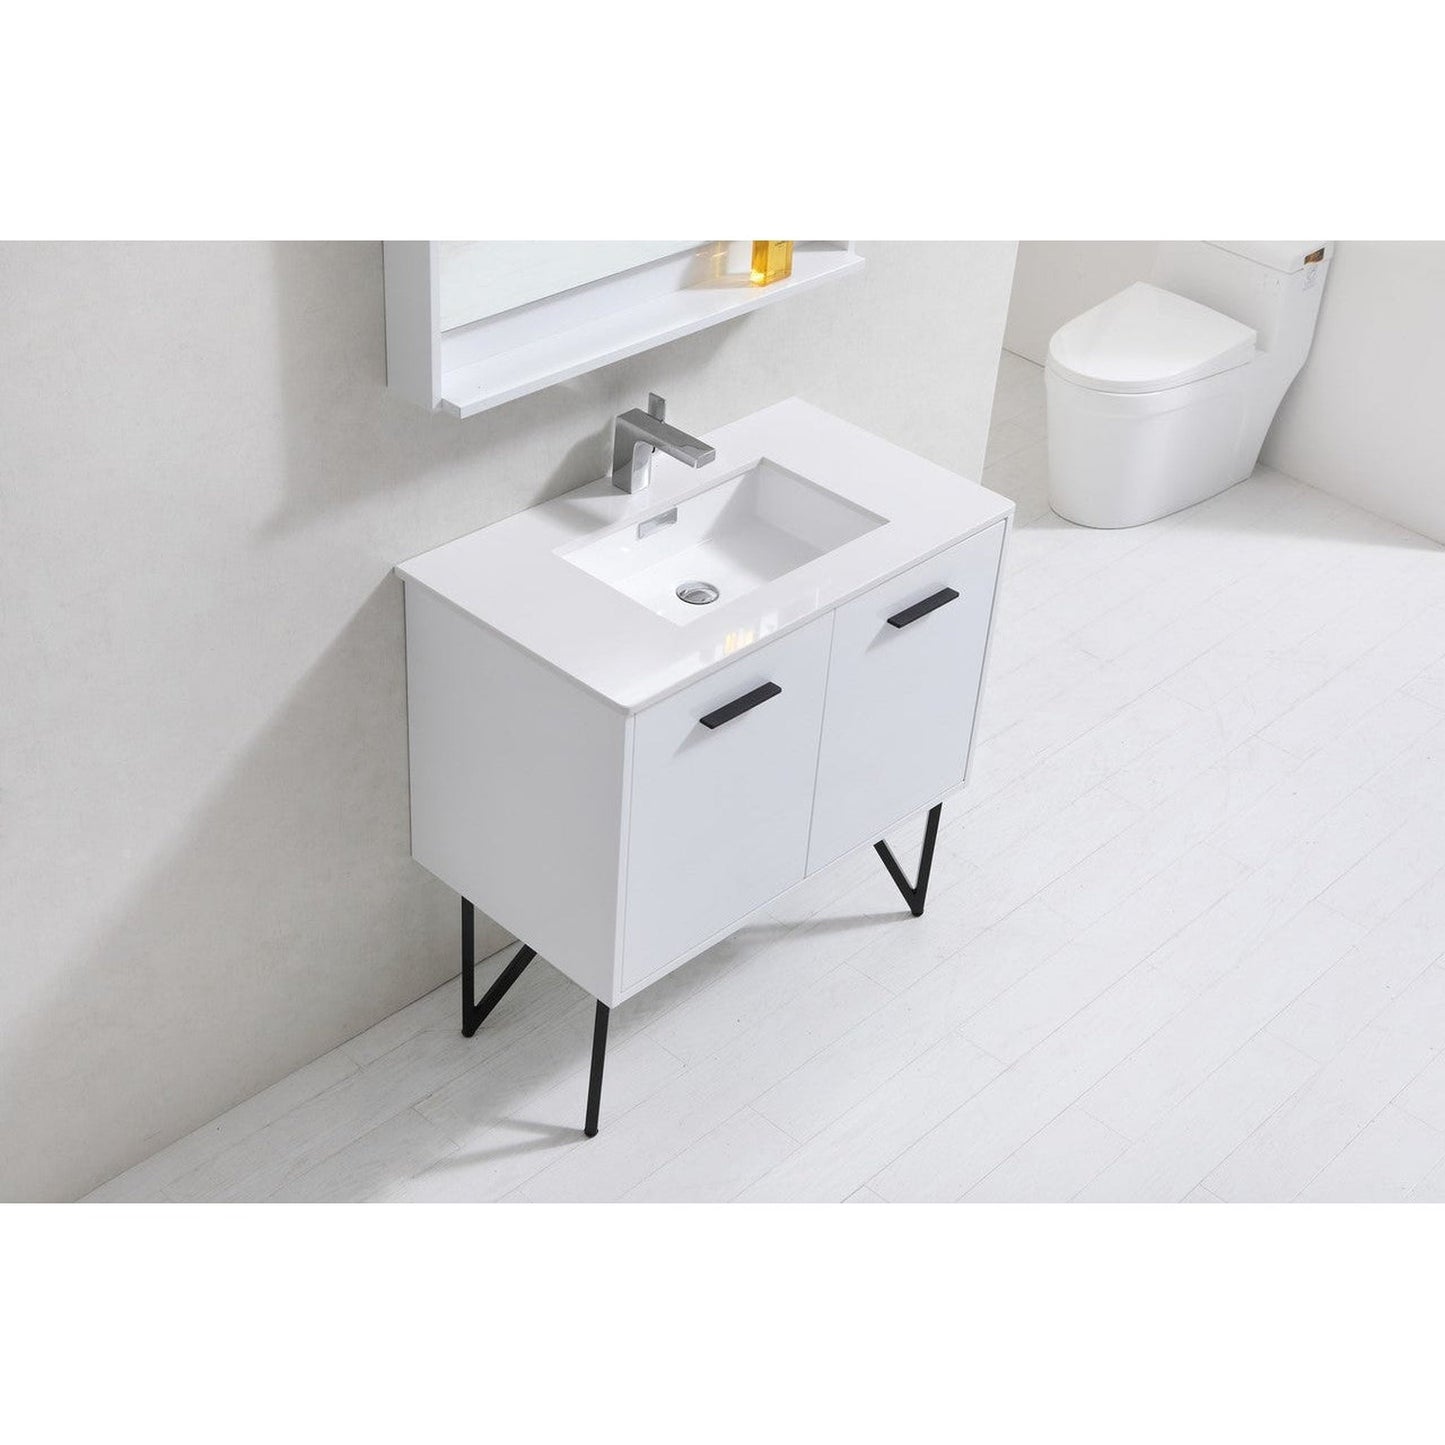 KubeBath Bosco 36" High Gloss White Modern Freestanding Bathroom Vanity With Single Undermount Sink With Overflow